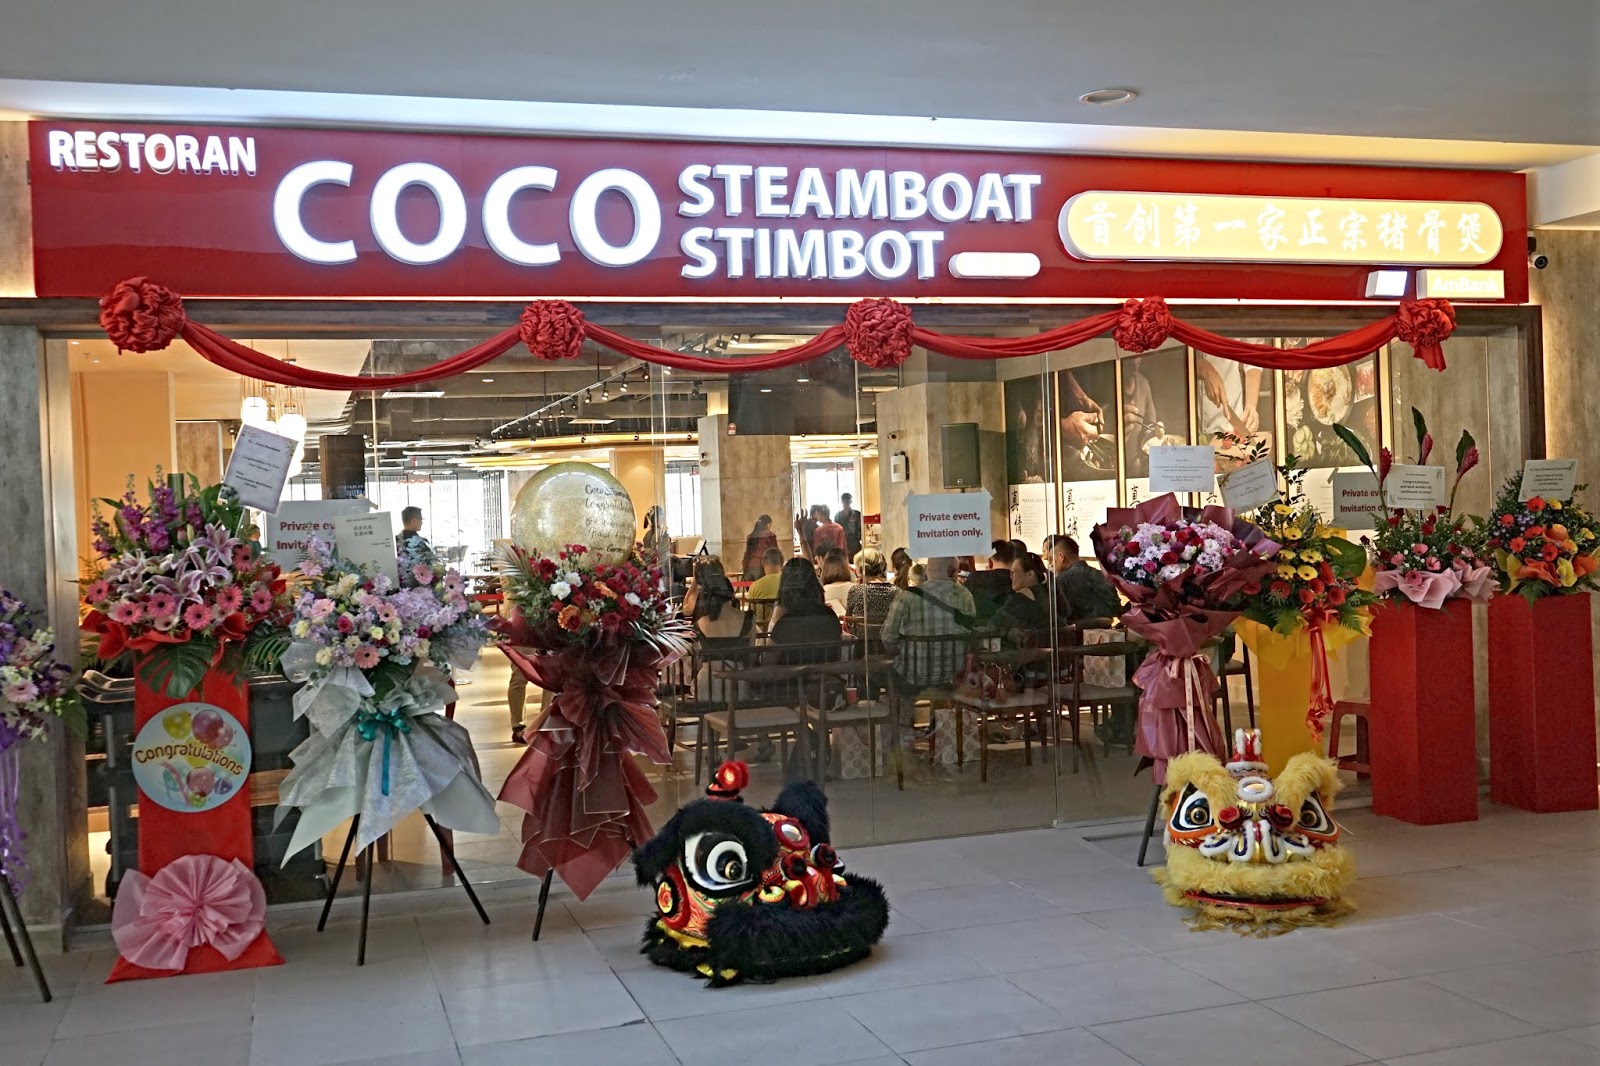 Coco steamboat